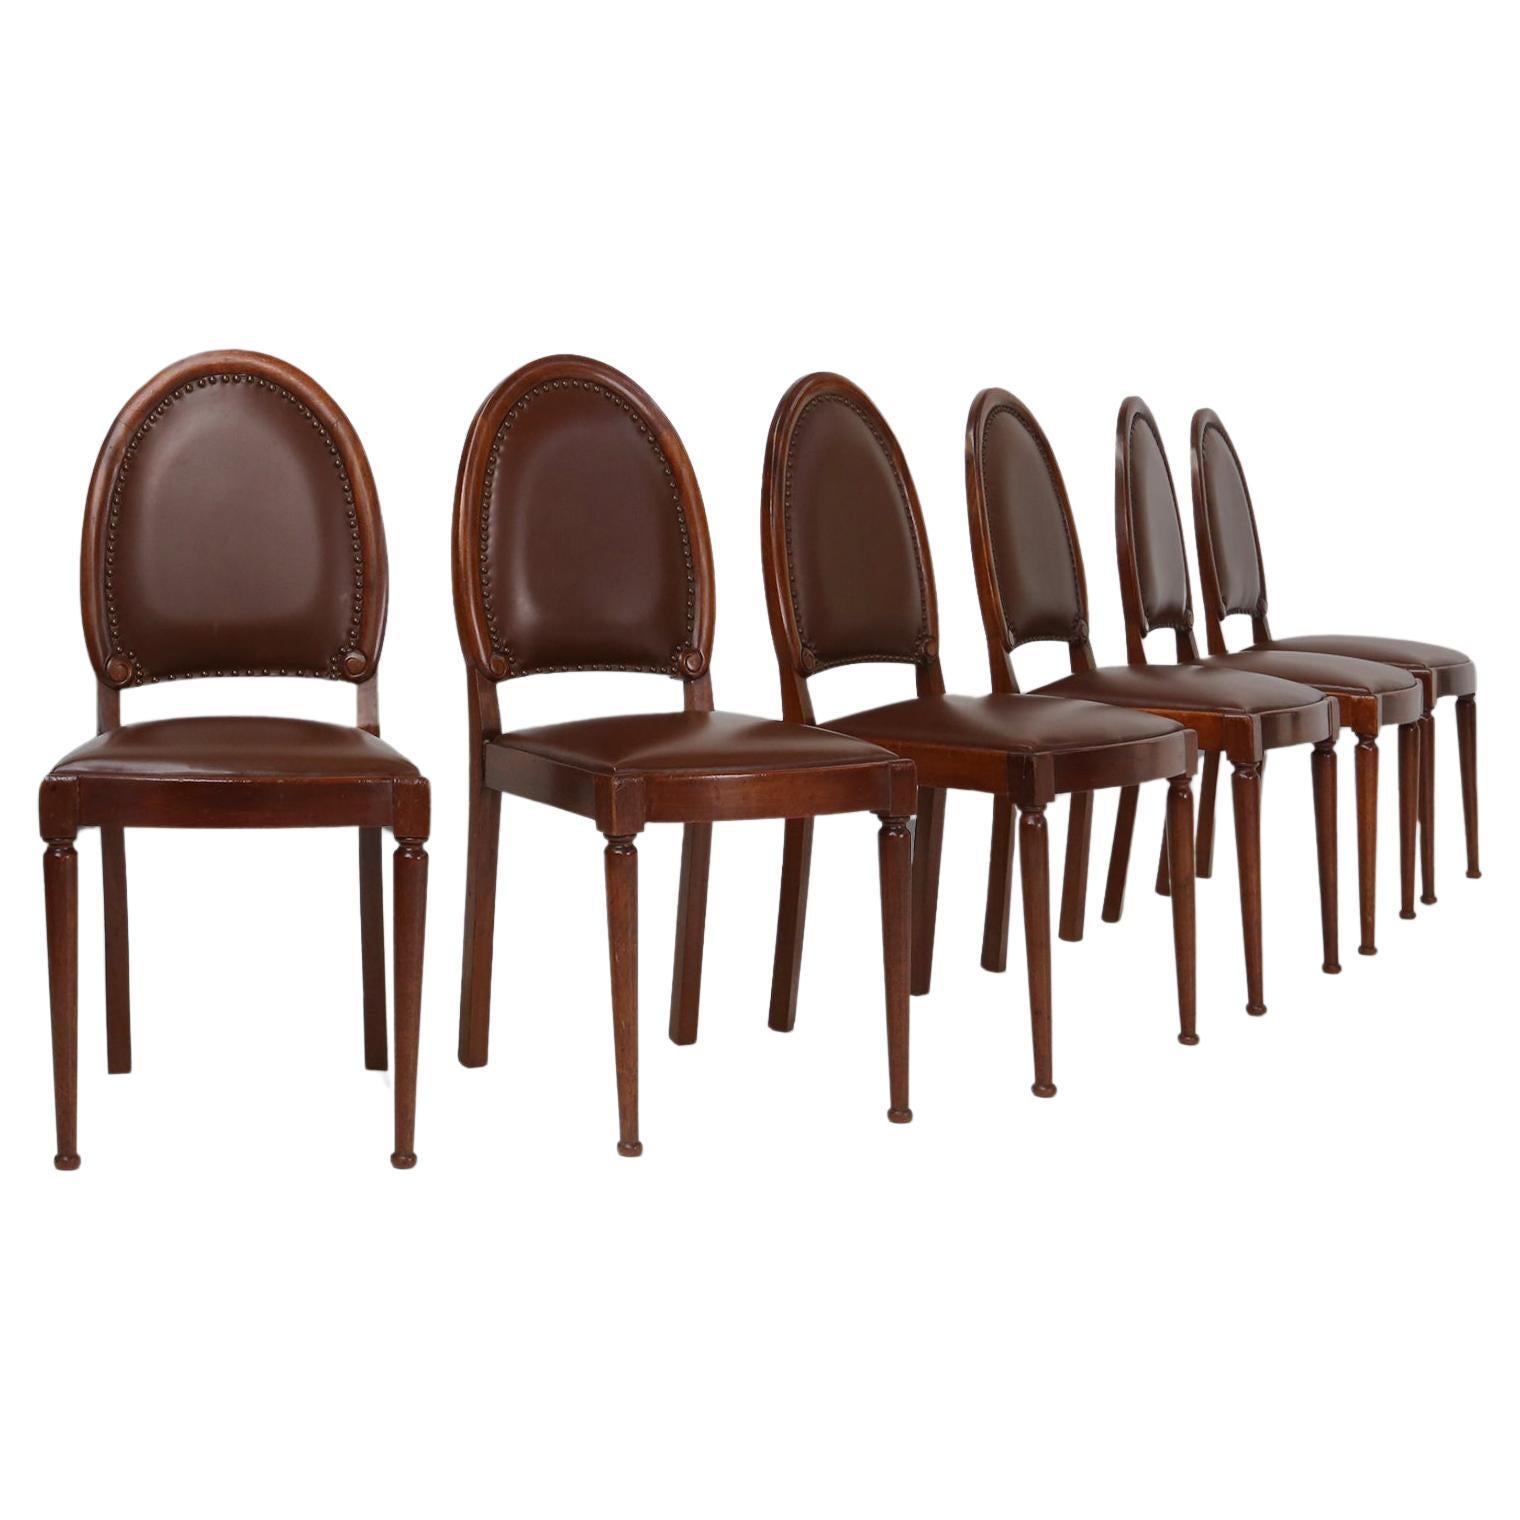 Art Deco set of six chairs by De Coene 1930